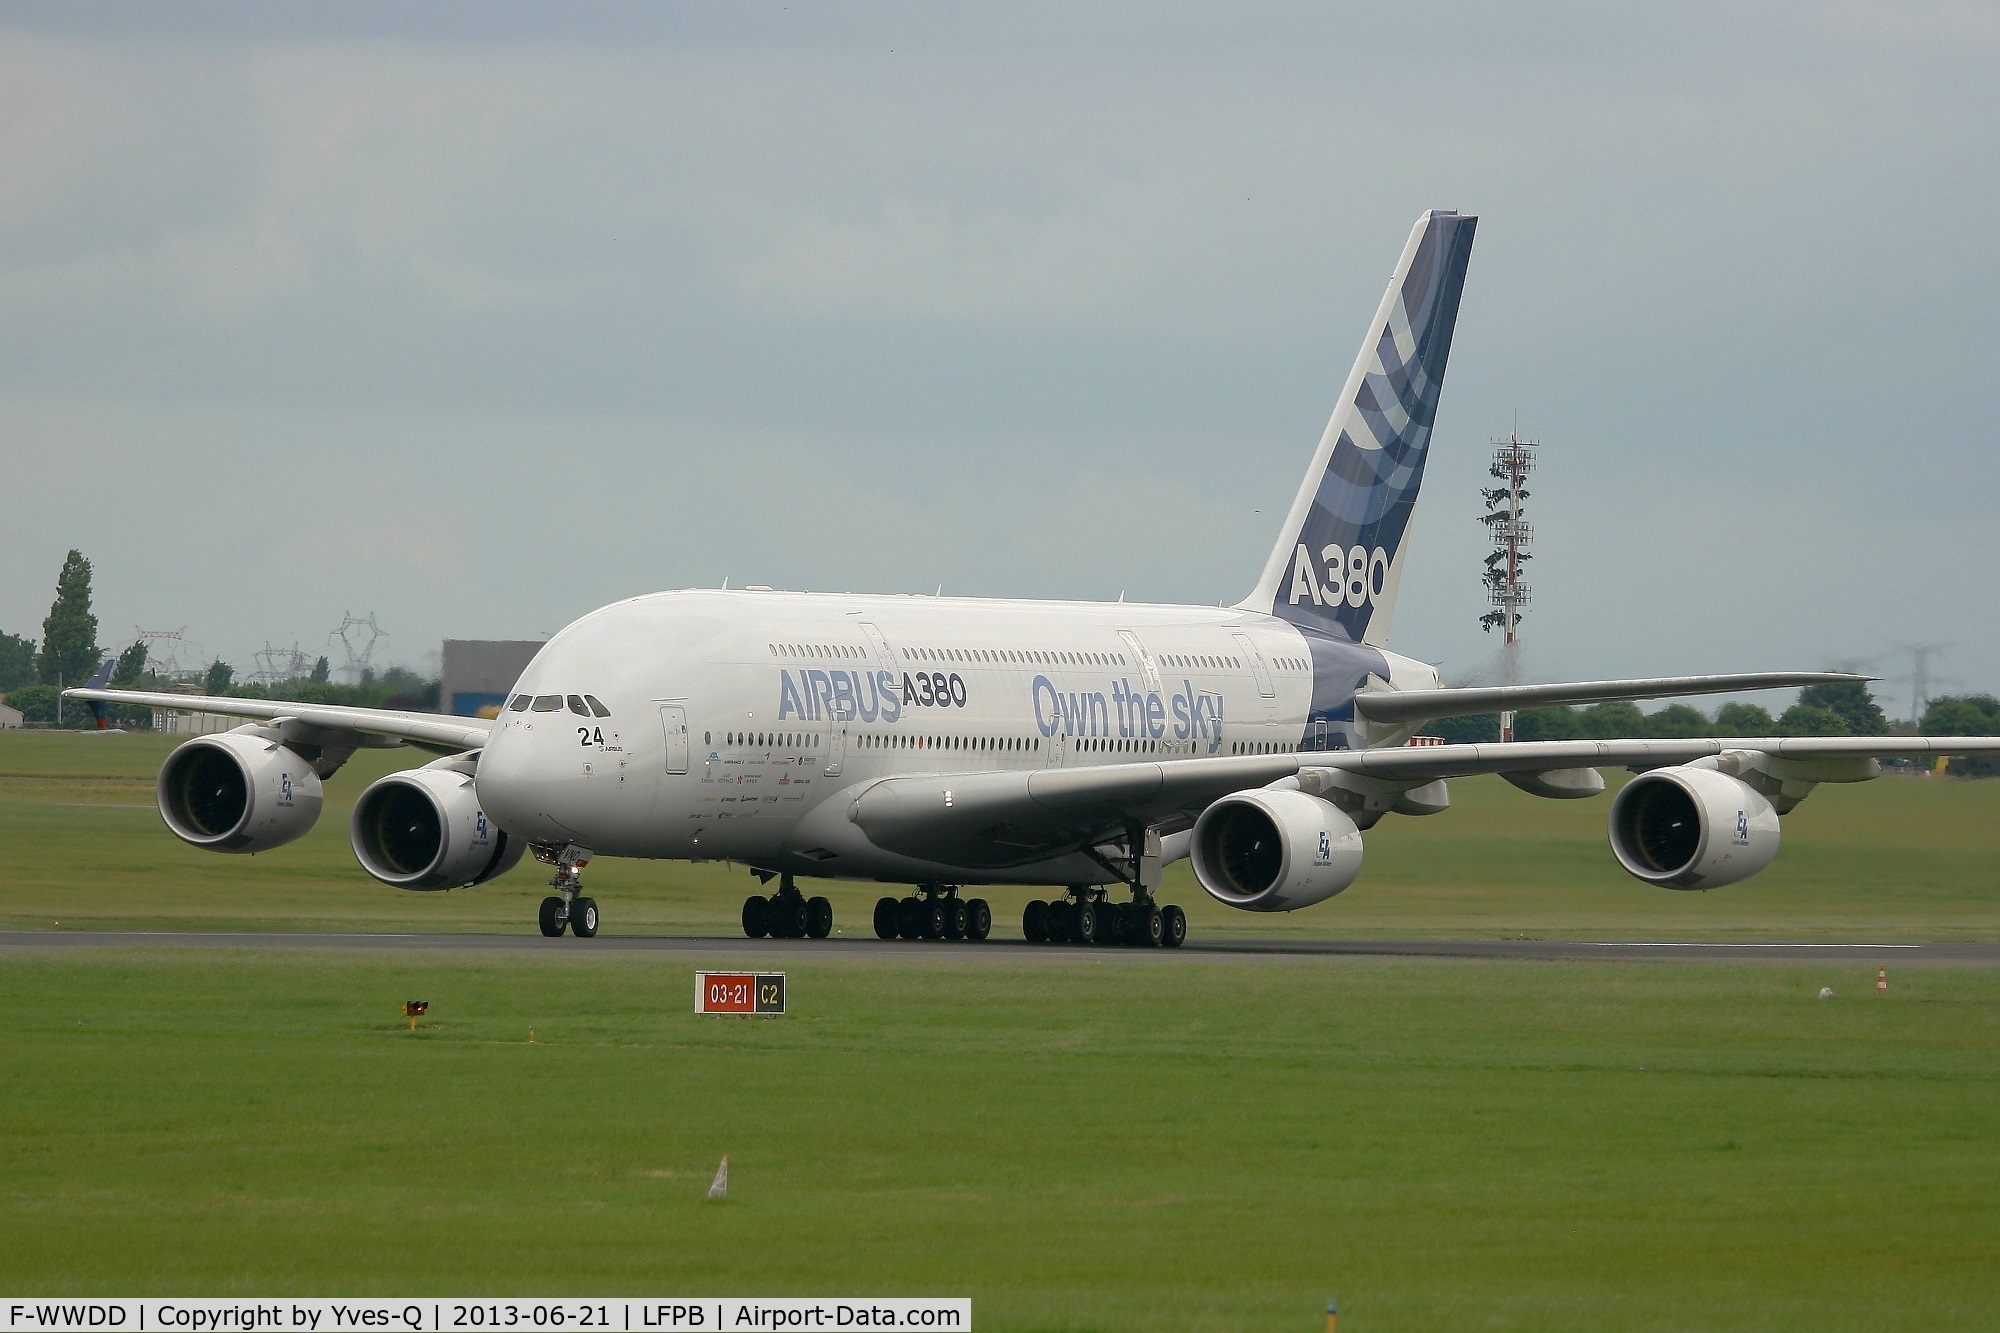 F-WWDD, 2005 Airbus A380-861 C/N 004, Airbus A380-861 Takes off Rwy 21, Paris-Le Bourget Air Show 2013